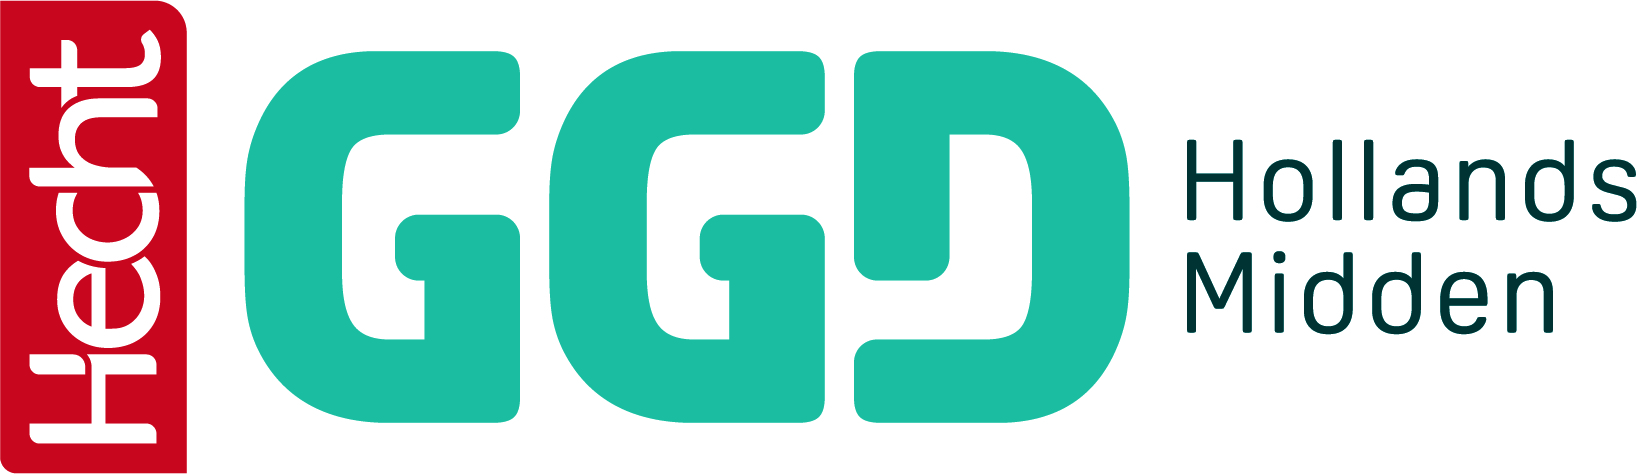 Logo Hecht-GGD-HM-logo-kleur-CMYK.jpg